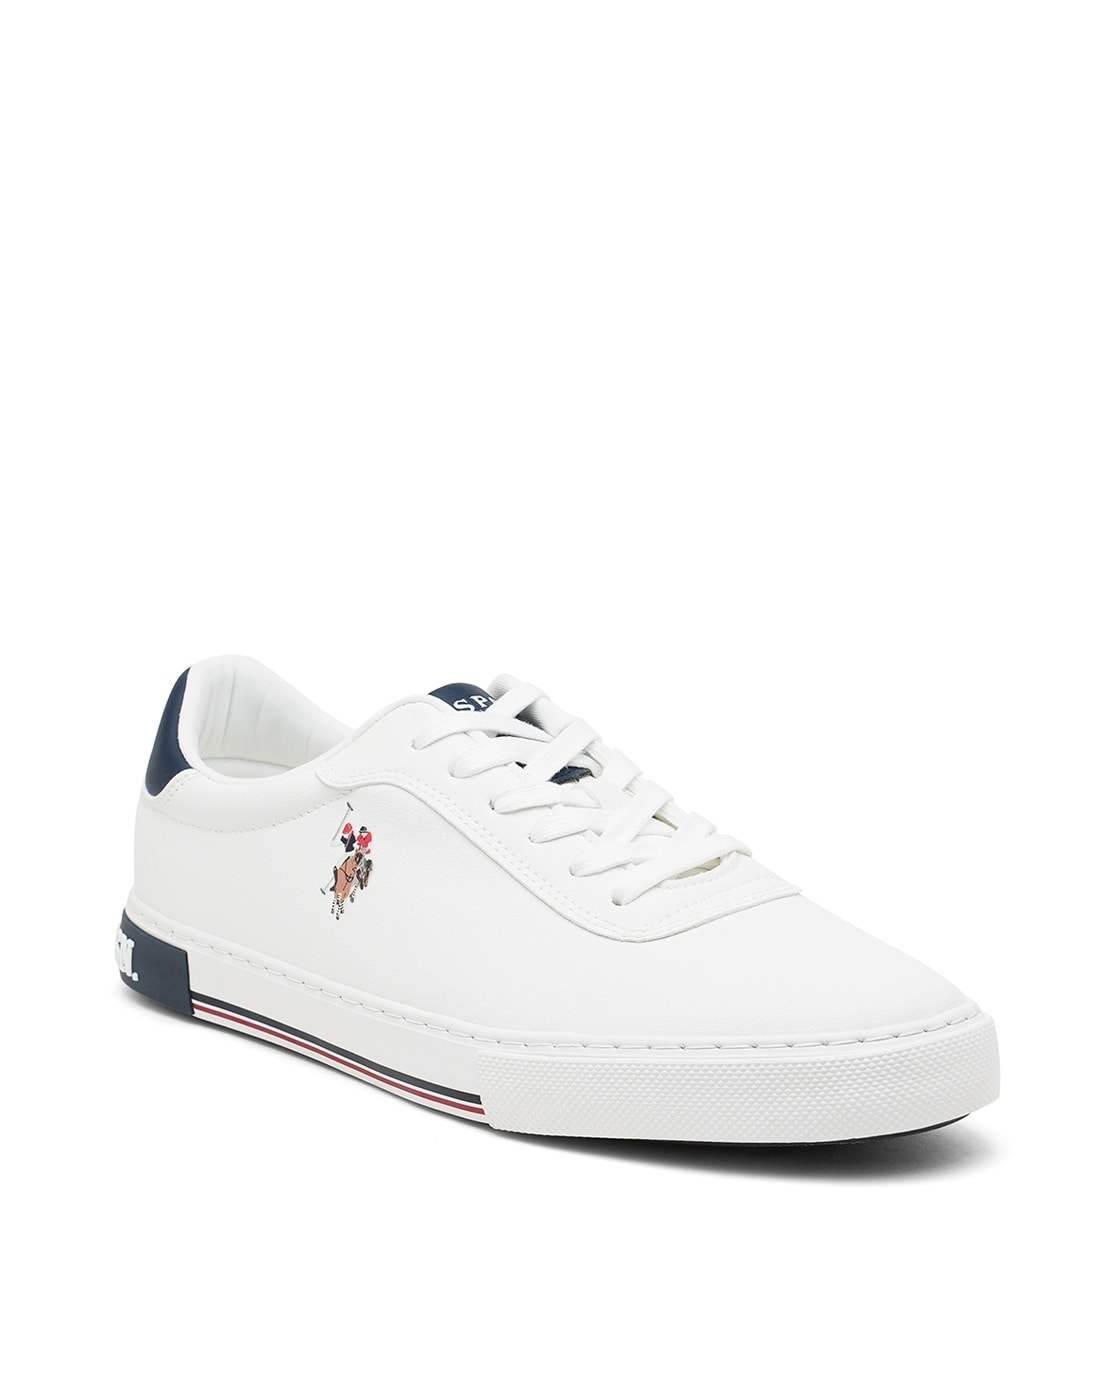 Modelo '89 Offwhite - Vegan Sneakers - SAYE